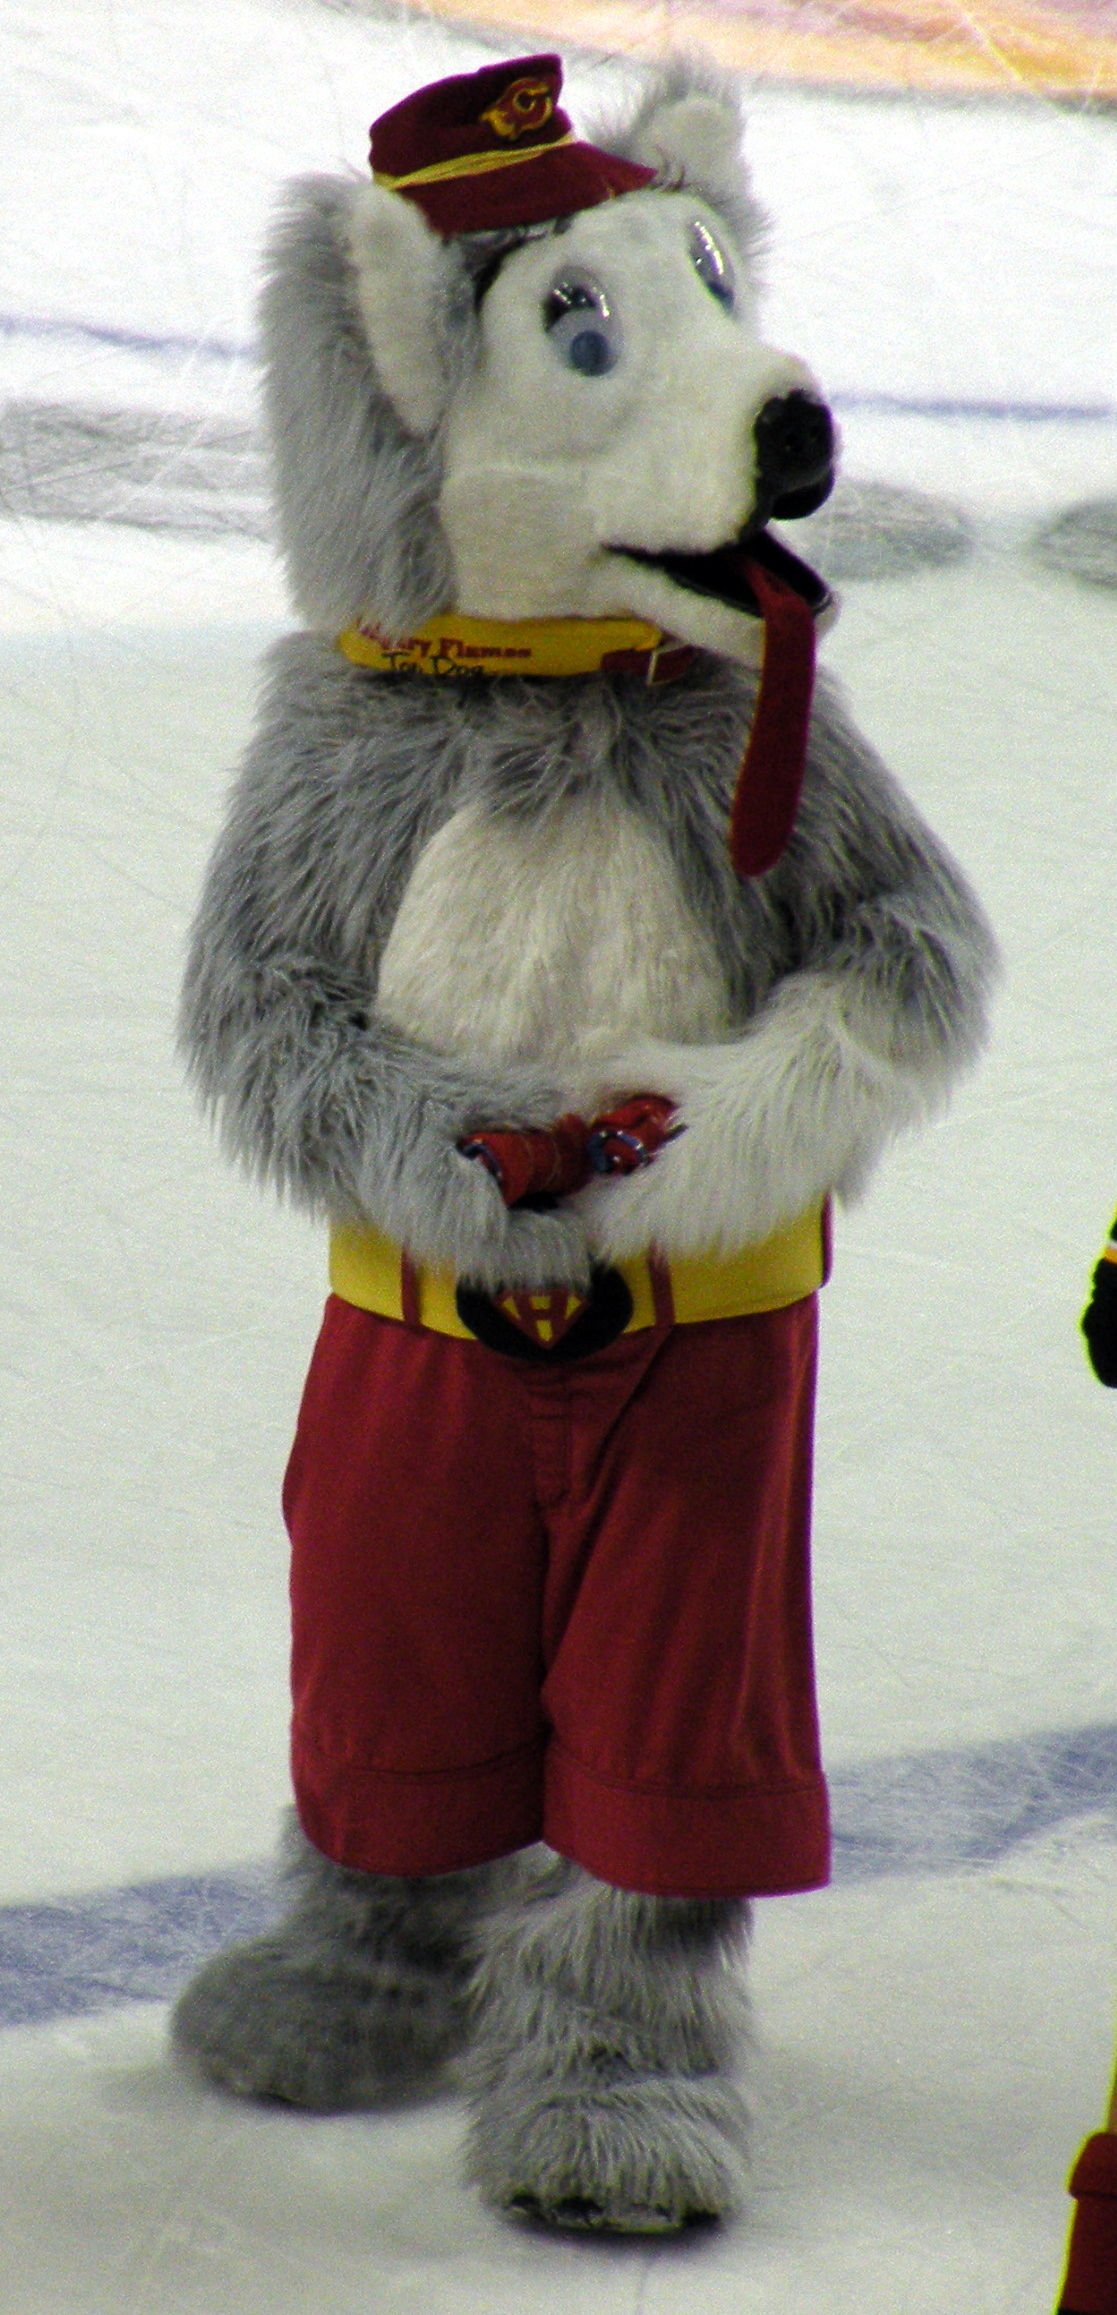 Orbit (mascot) - Wikipedia